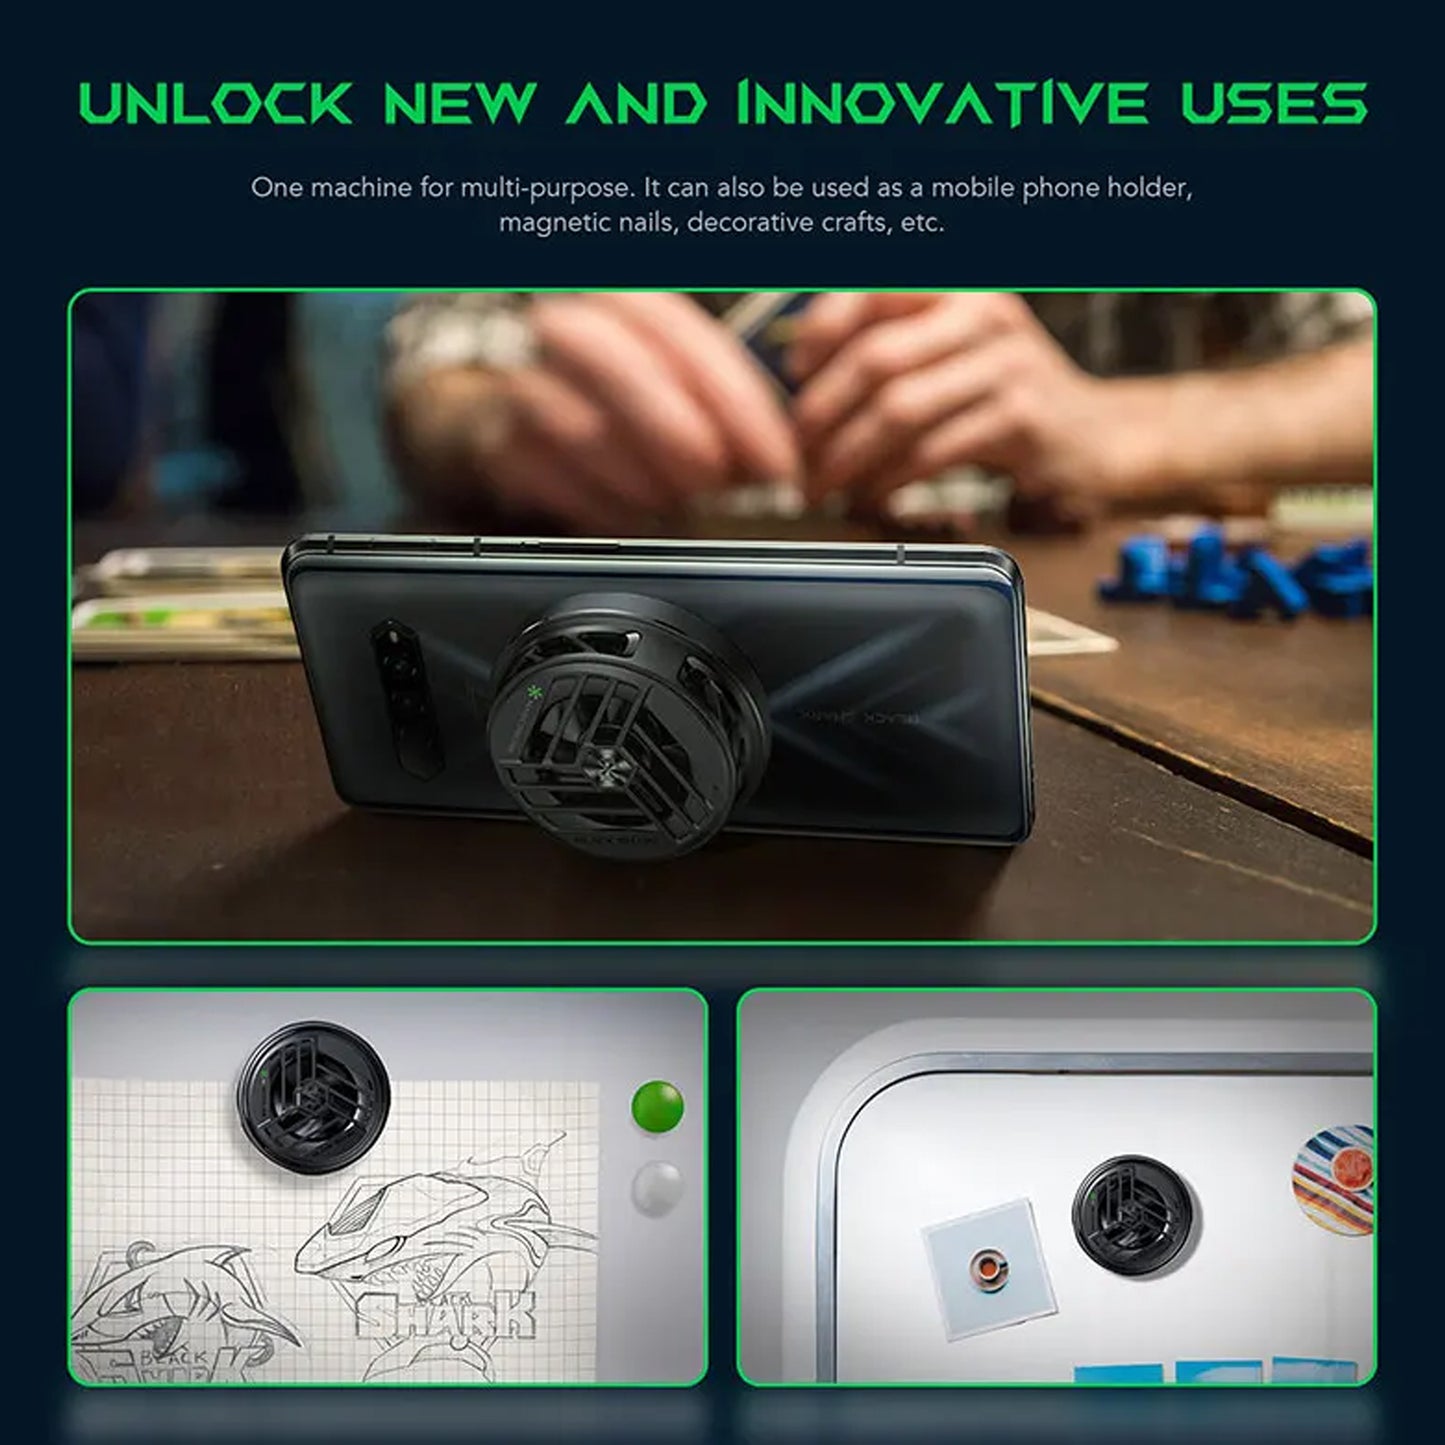 Black Shark Magnetic Cooler for Gaming , Fast Cooling , No Need Clip Magnetic Design